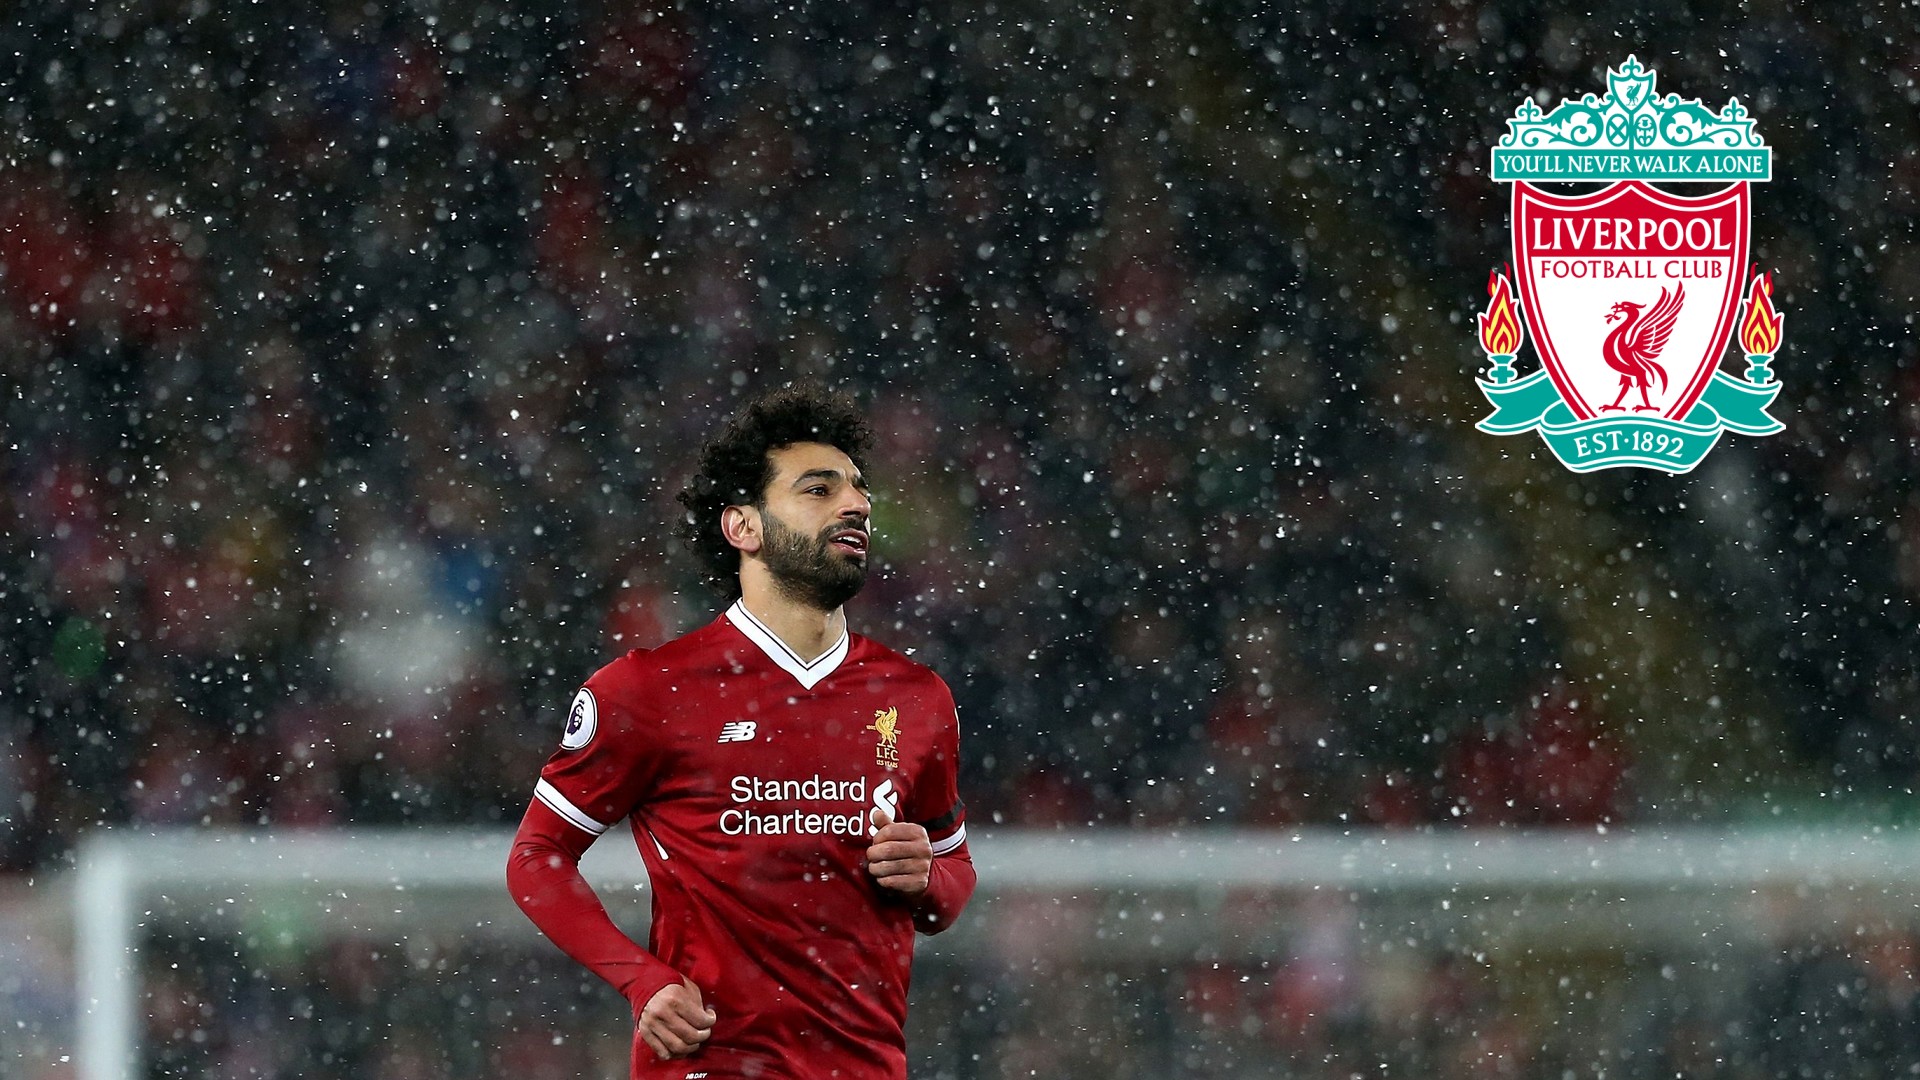 Mohamed Salah Liverpool Desktop Wallpaper With Image